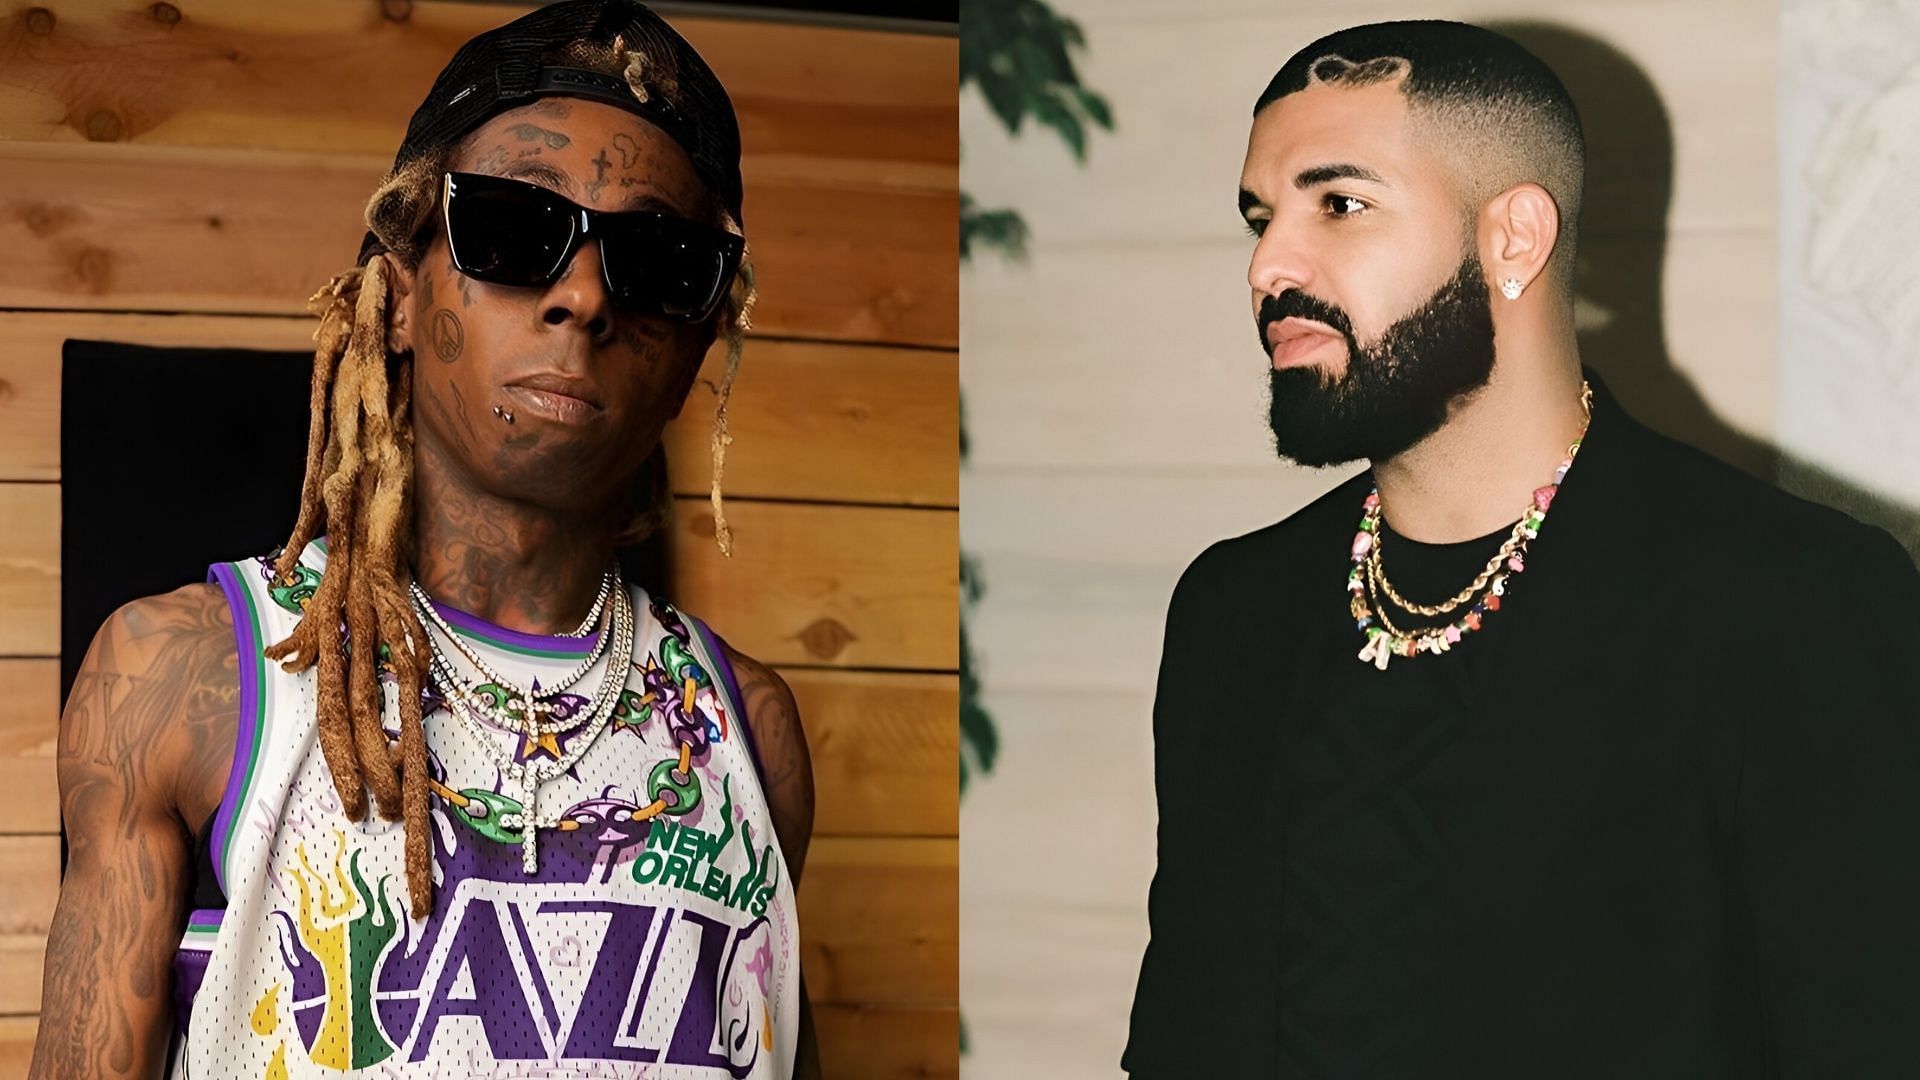 Lil Wayne gets trolled online for saying Drake gets hate for being light-skinned. (Image via Instagram/@,liltunechi, @champagnepapi)